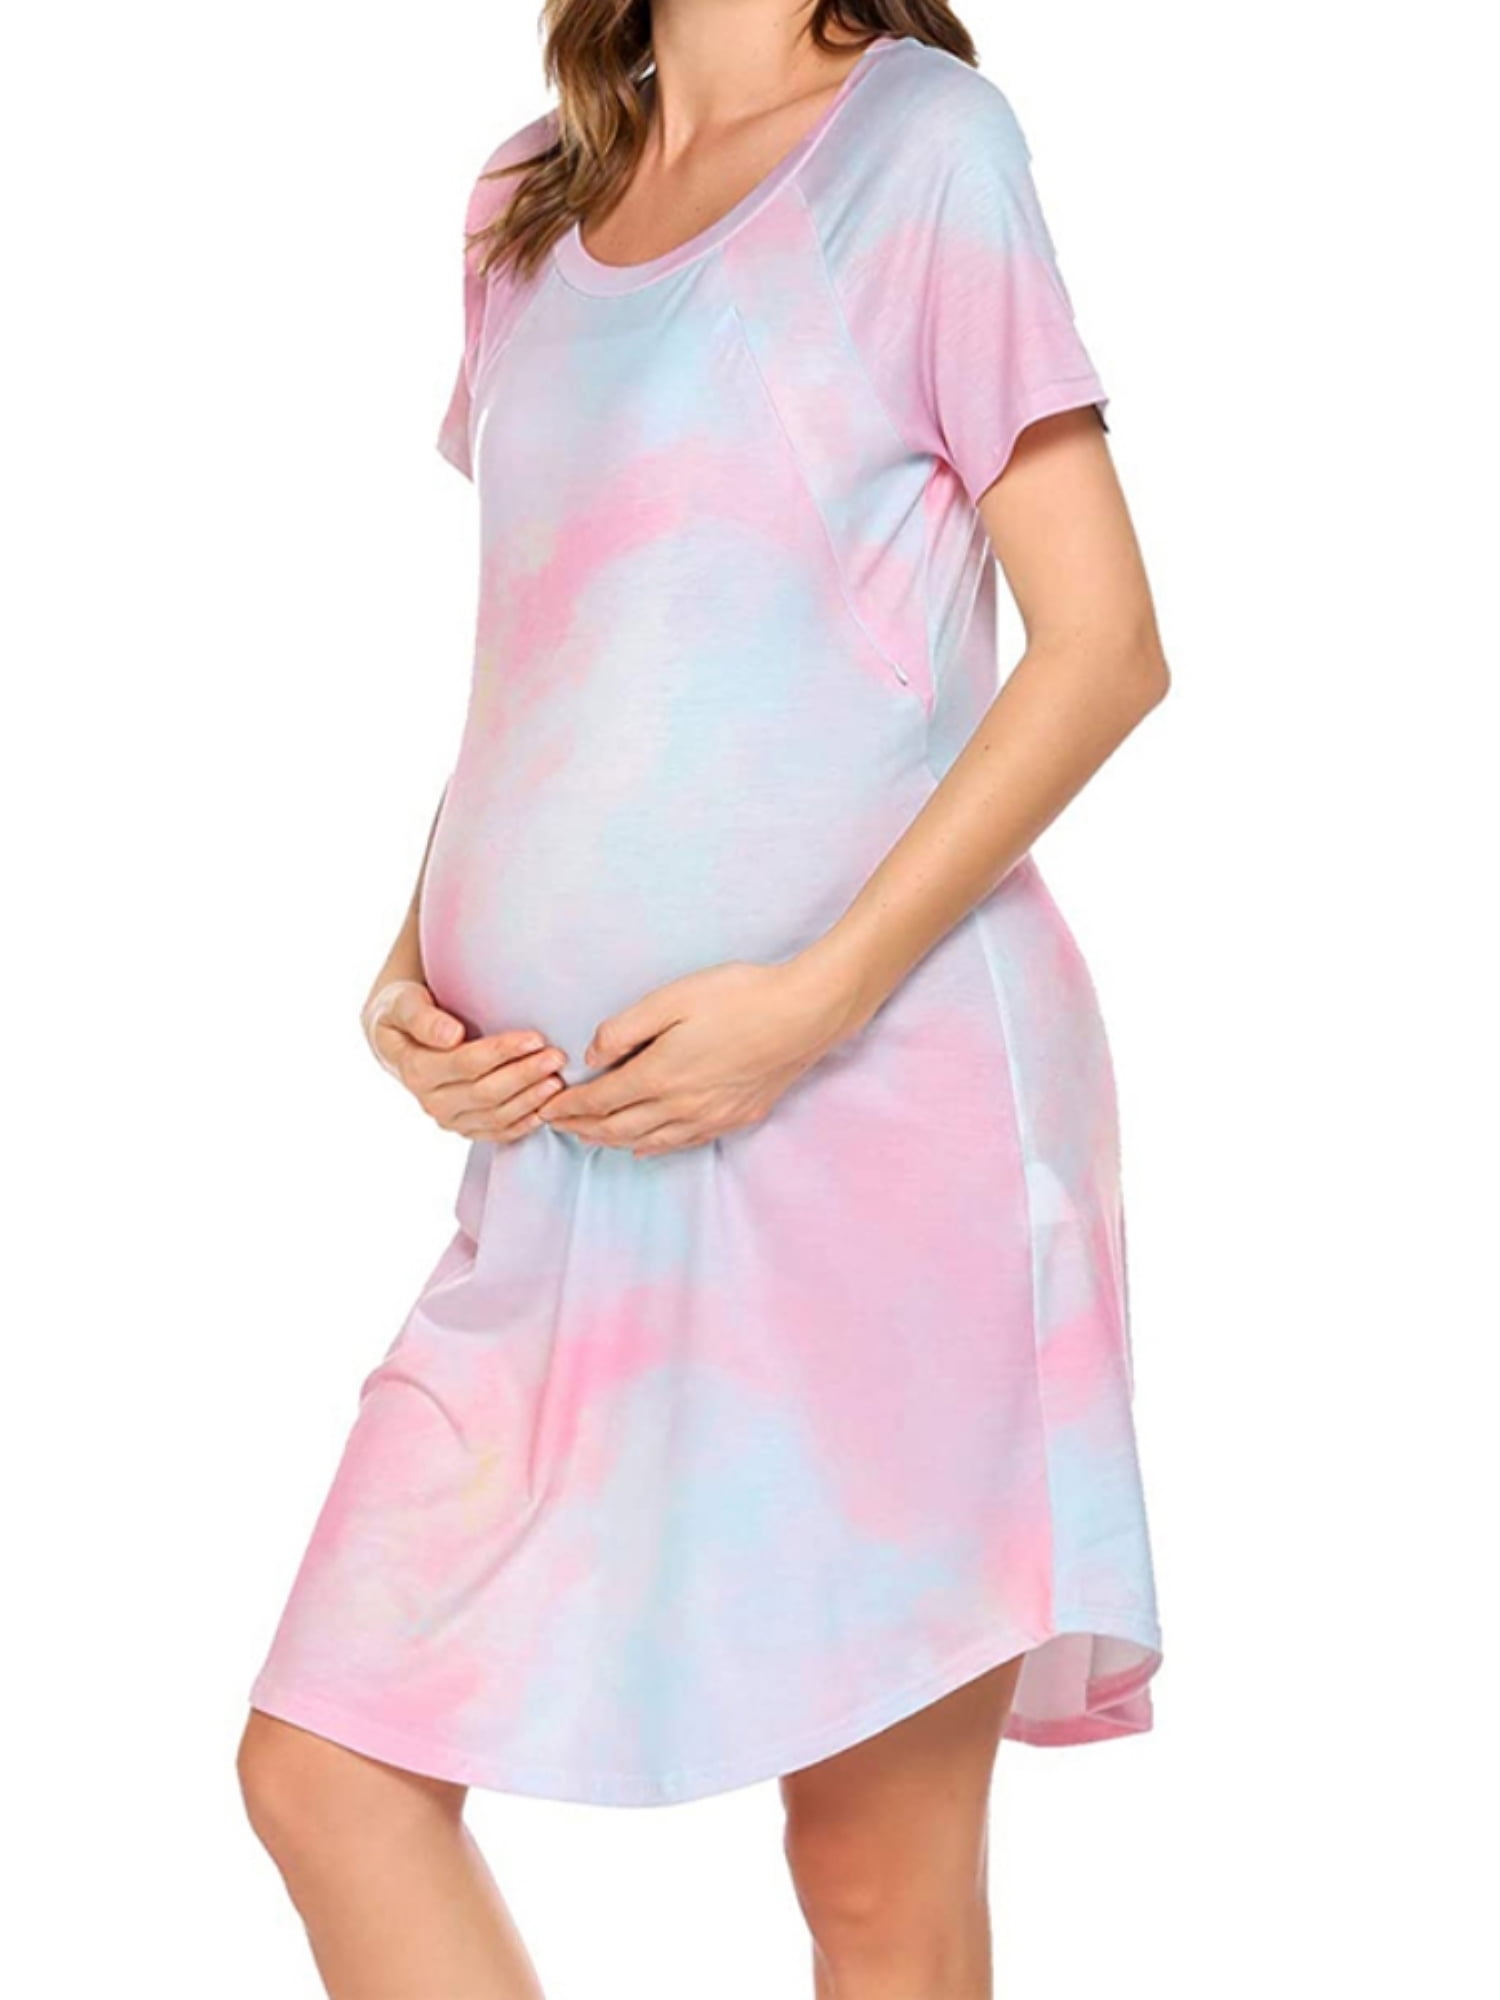 Women Sleepshirts 3 in 1 Labor/Maternity/Nursing Nightgown Short